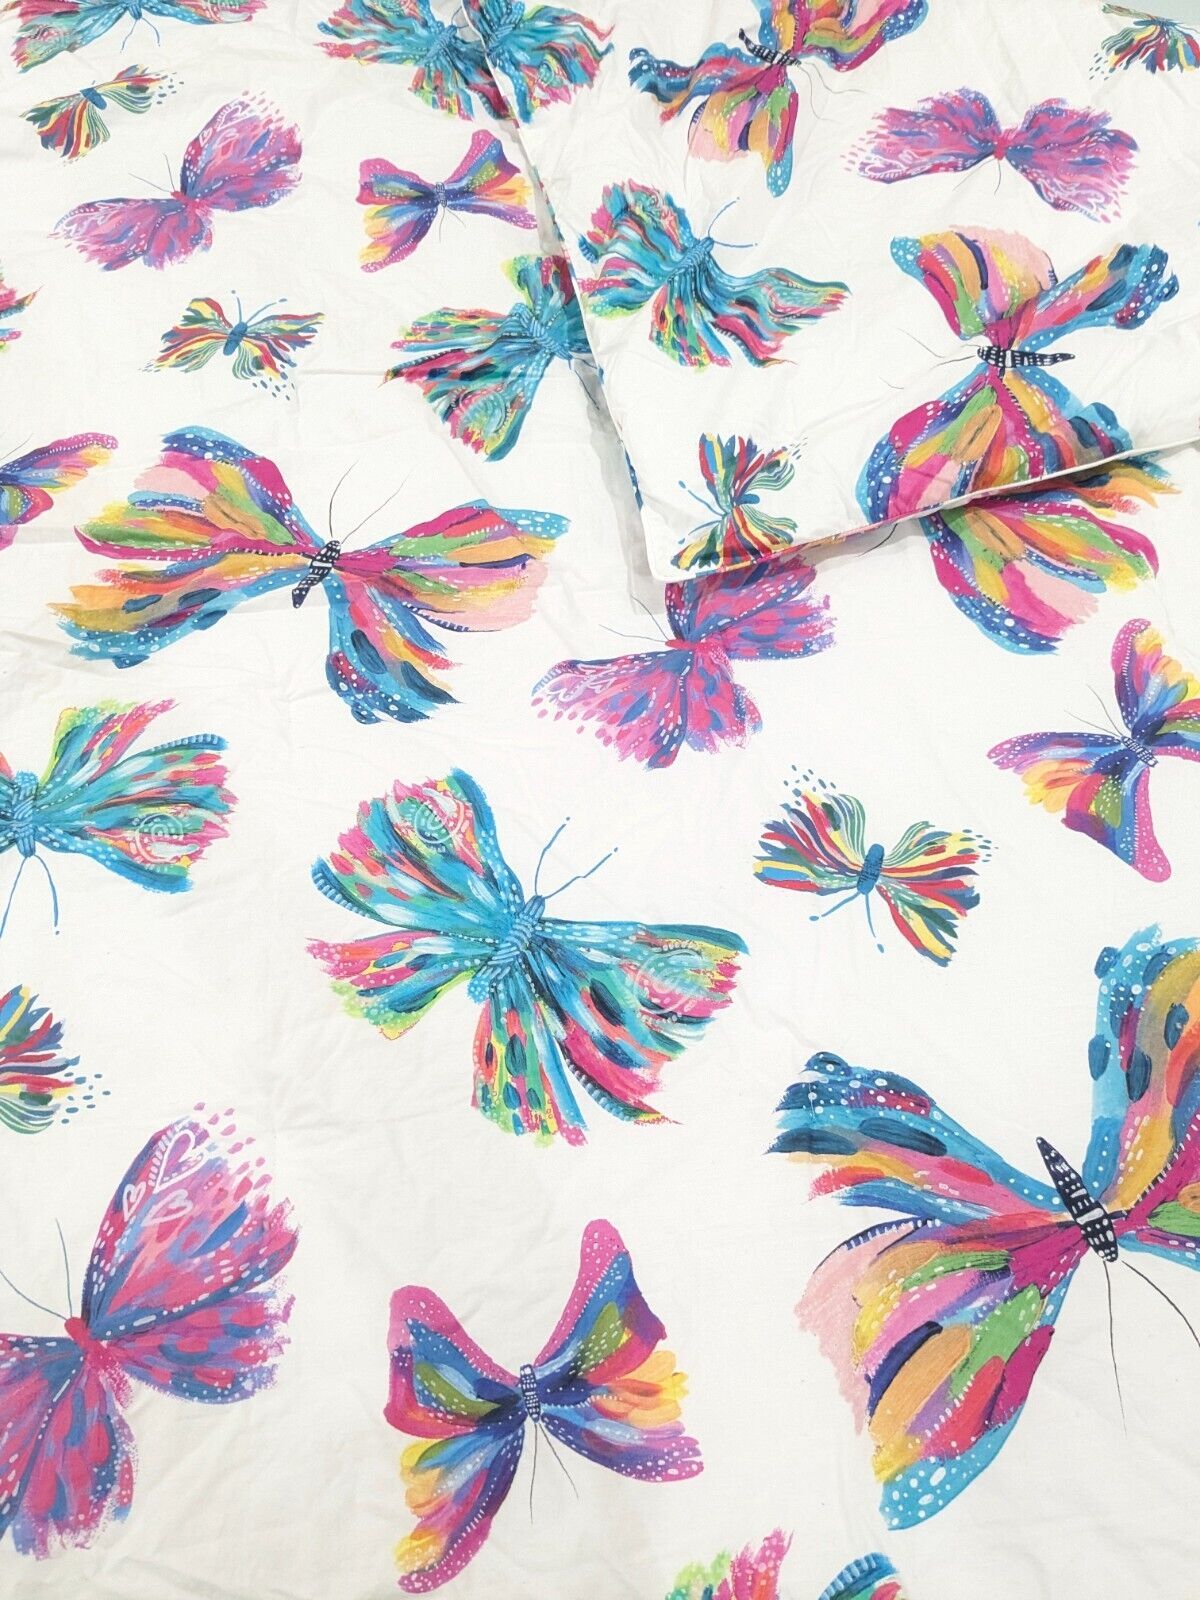 Pottery Barn Kids Etta Vee Butterfly Full Queen Comforter watercolor colorful - $198.00